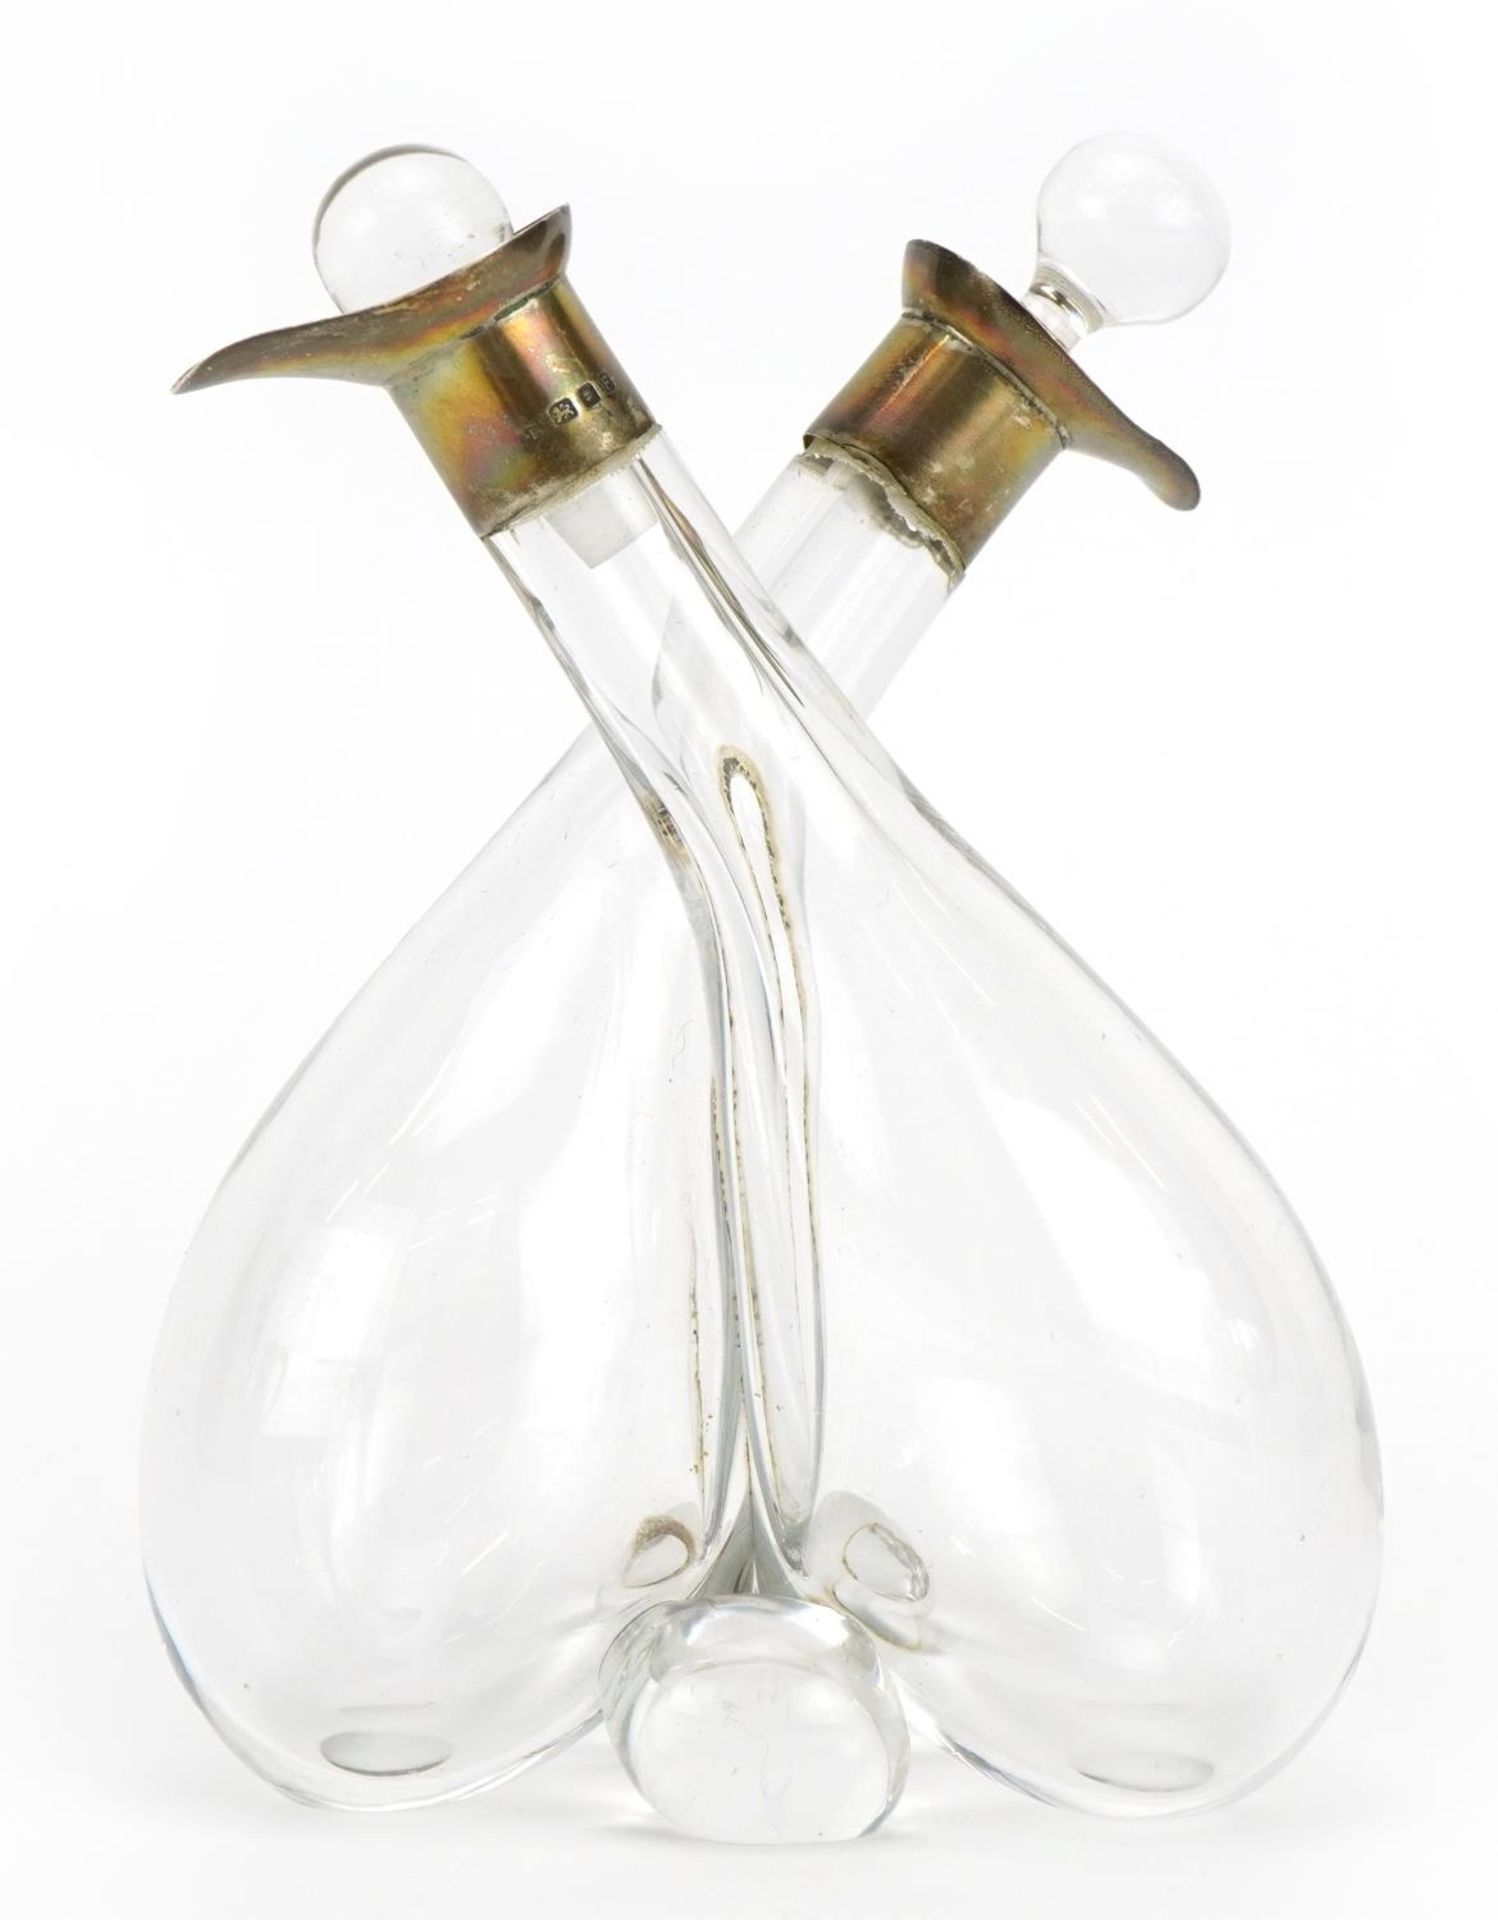 Robert Pringle & Sons, George VI silver mounted glass oil and vinegar bottle, London 1941, 13cm high